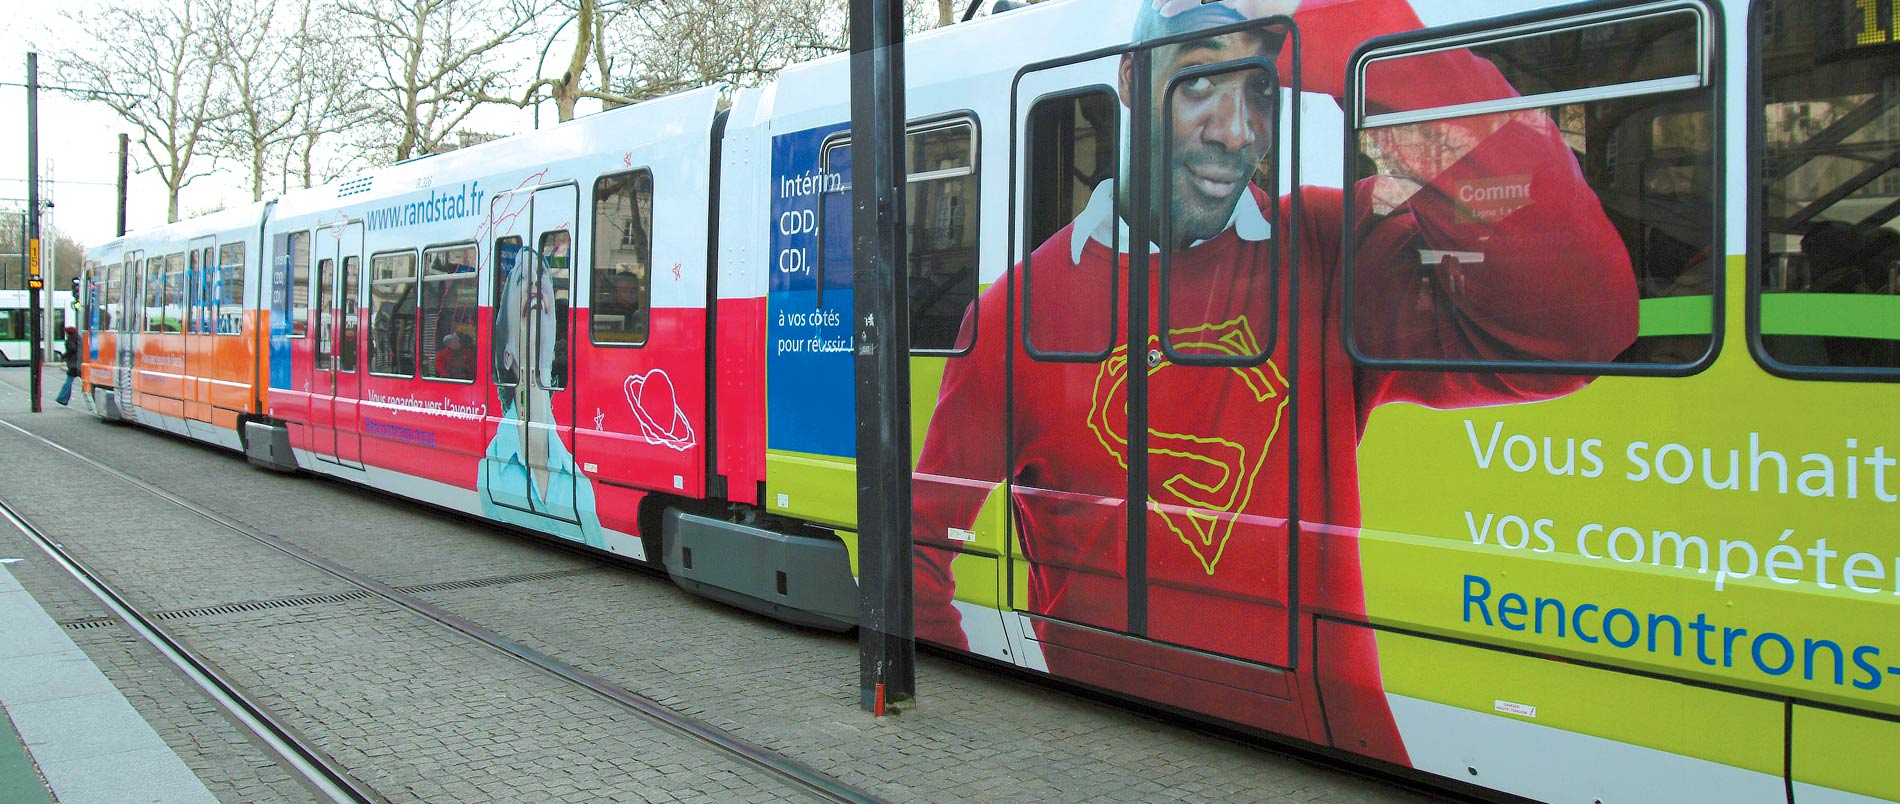 campagne affichage randstad, création et réalisation tramway